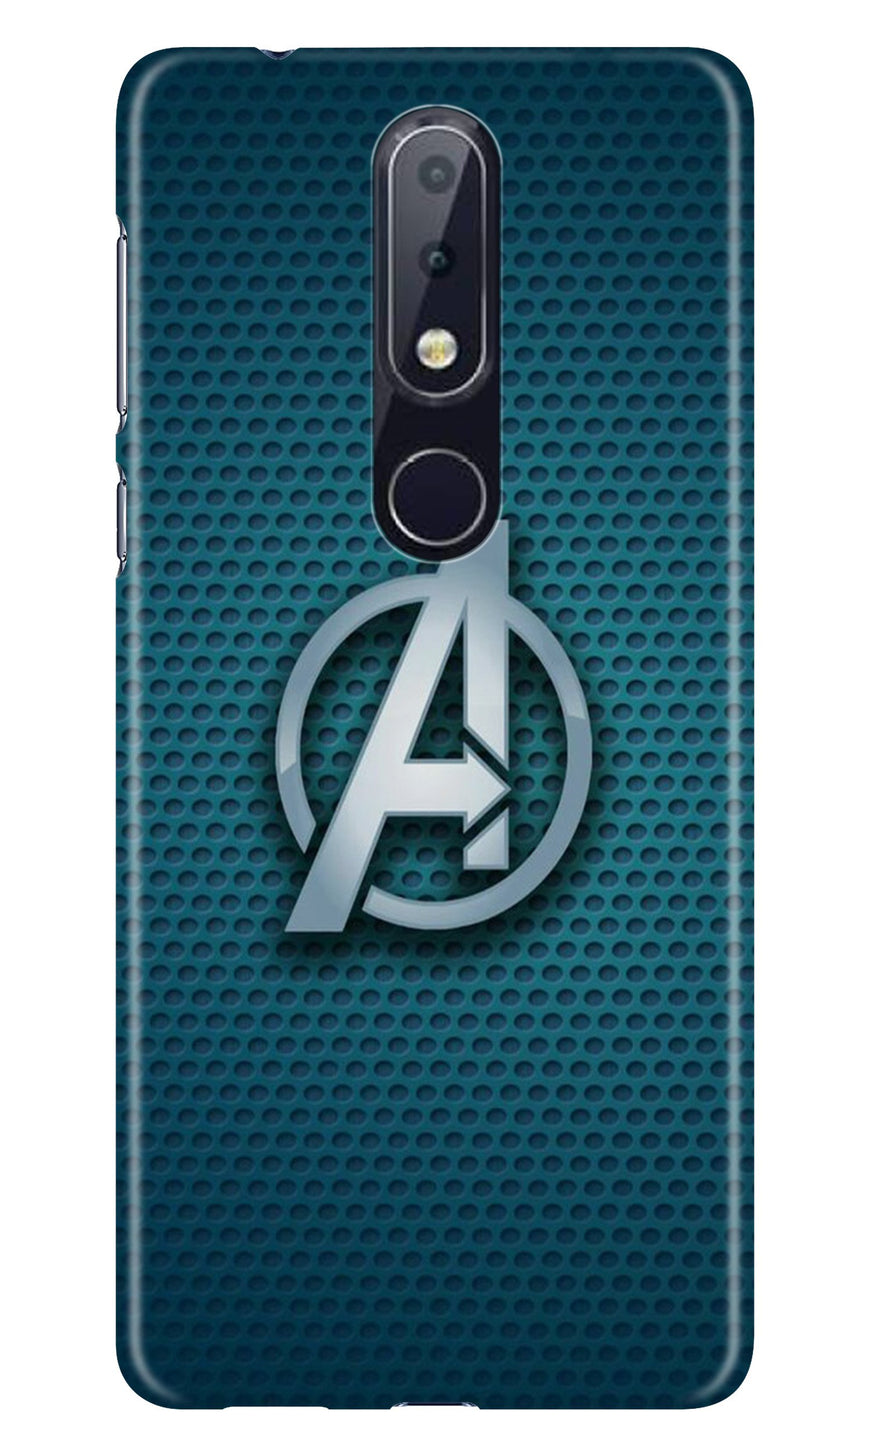 Avengers Case for Nokia 6.1 Plus (Design No. 246)